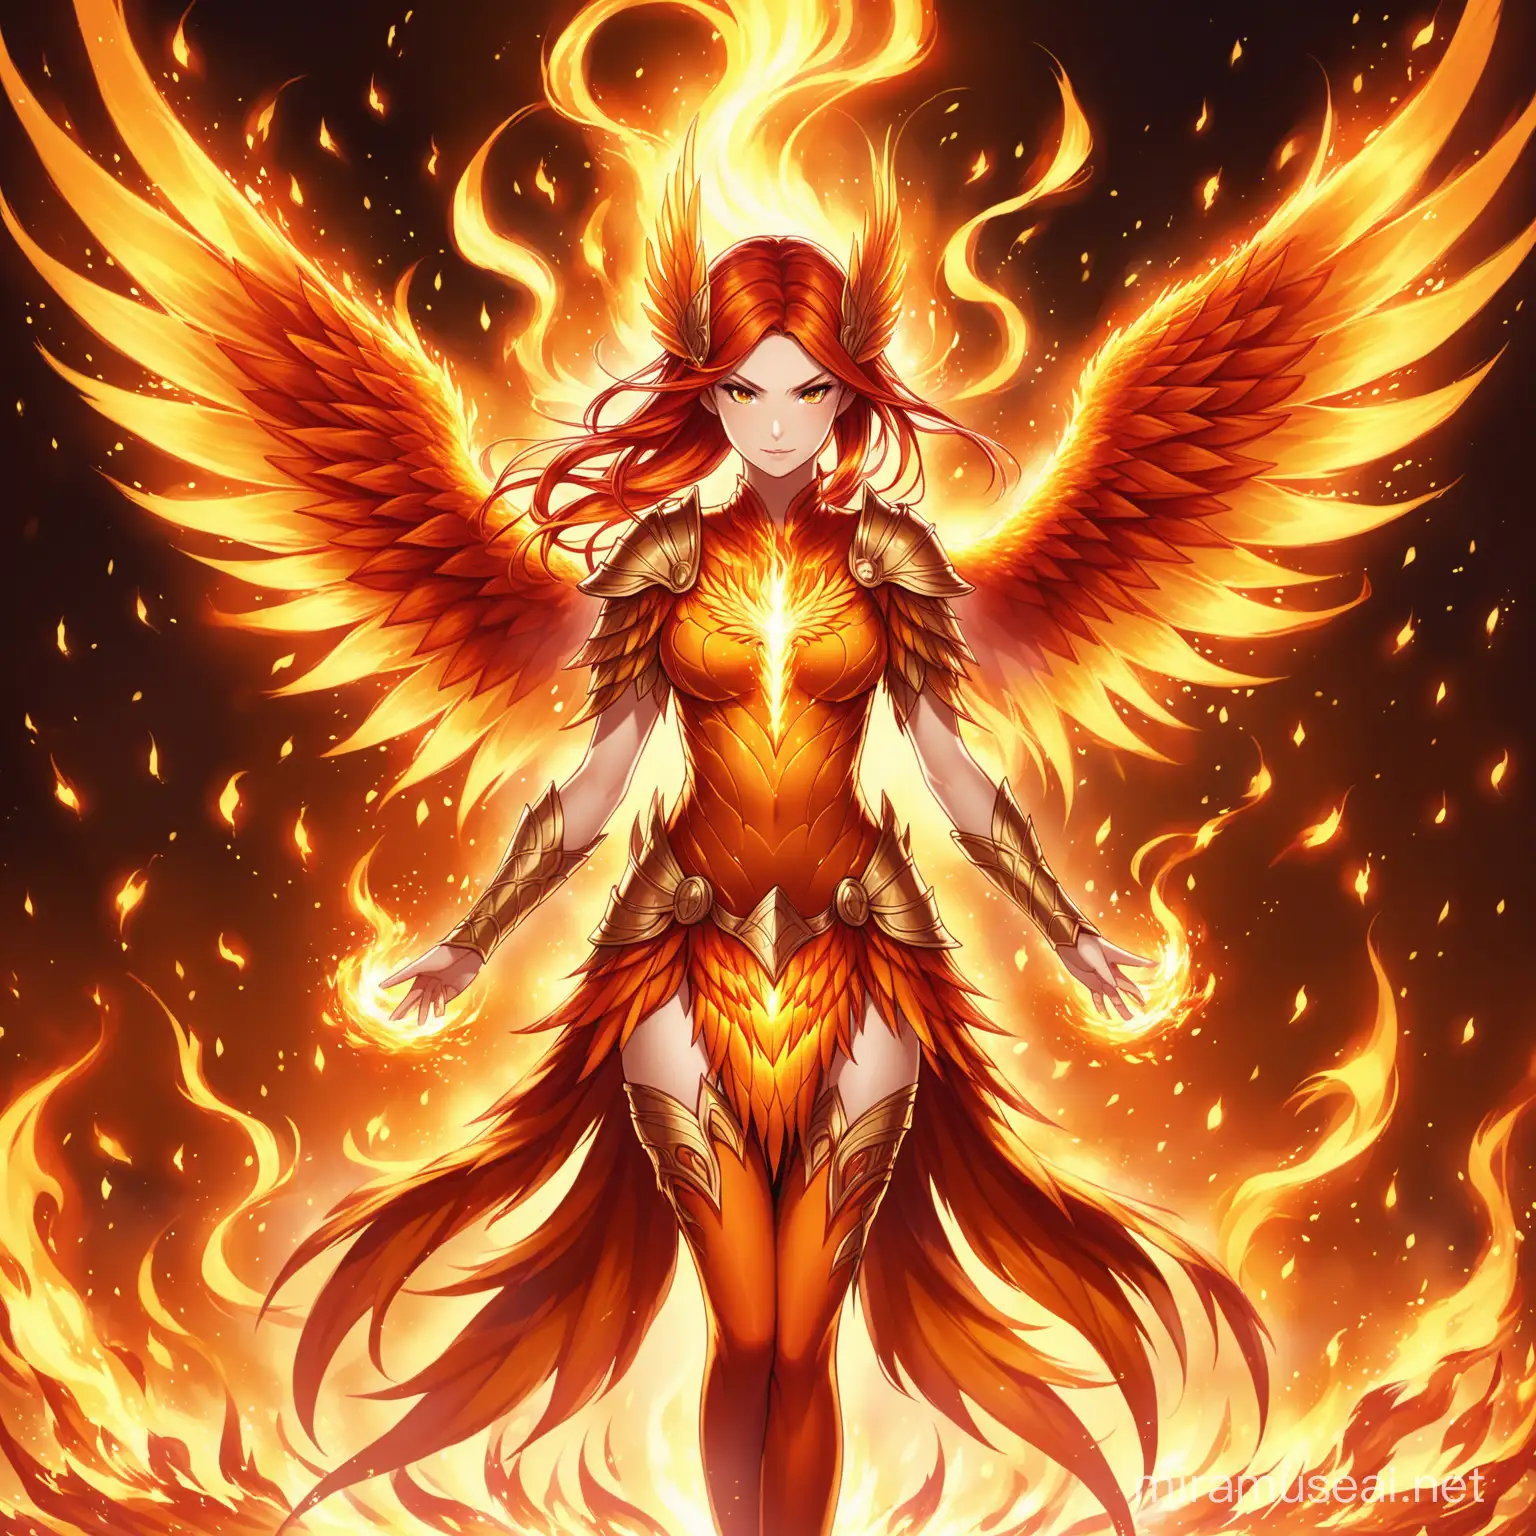 female phoenix fairy warrior with flames around her... inquadratura totale...dietro di lei fiamme e scintille 